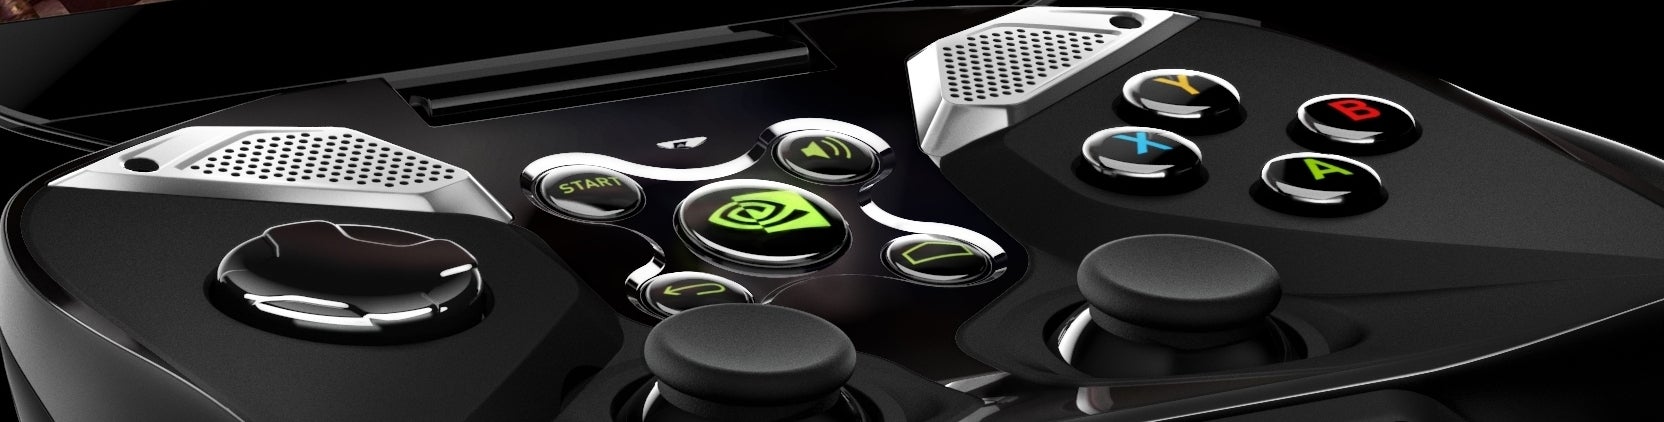 Imagen para Impresiones del Project Shield de NVIDIA